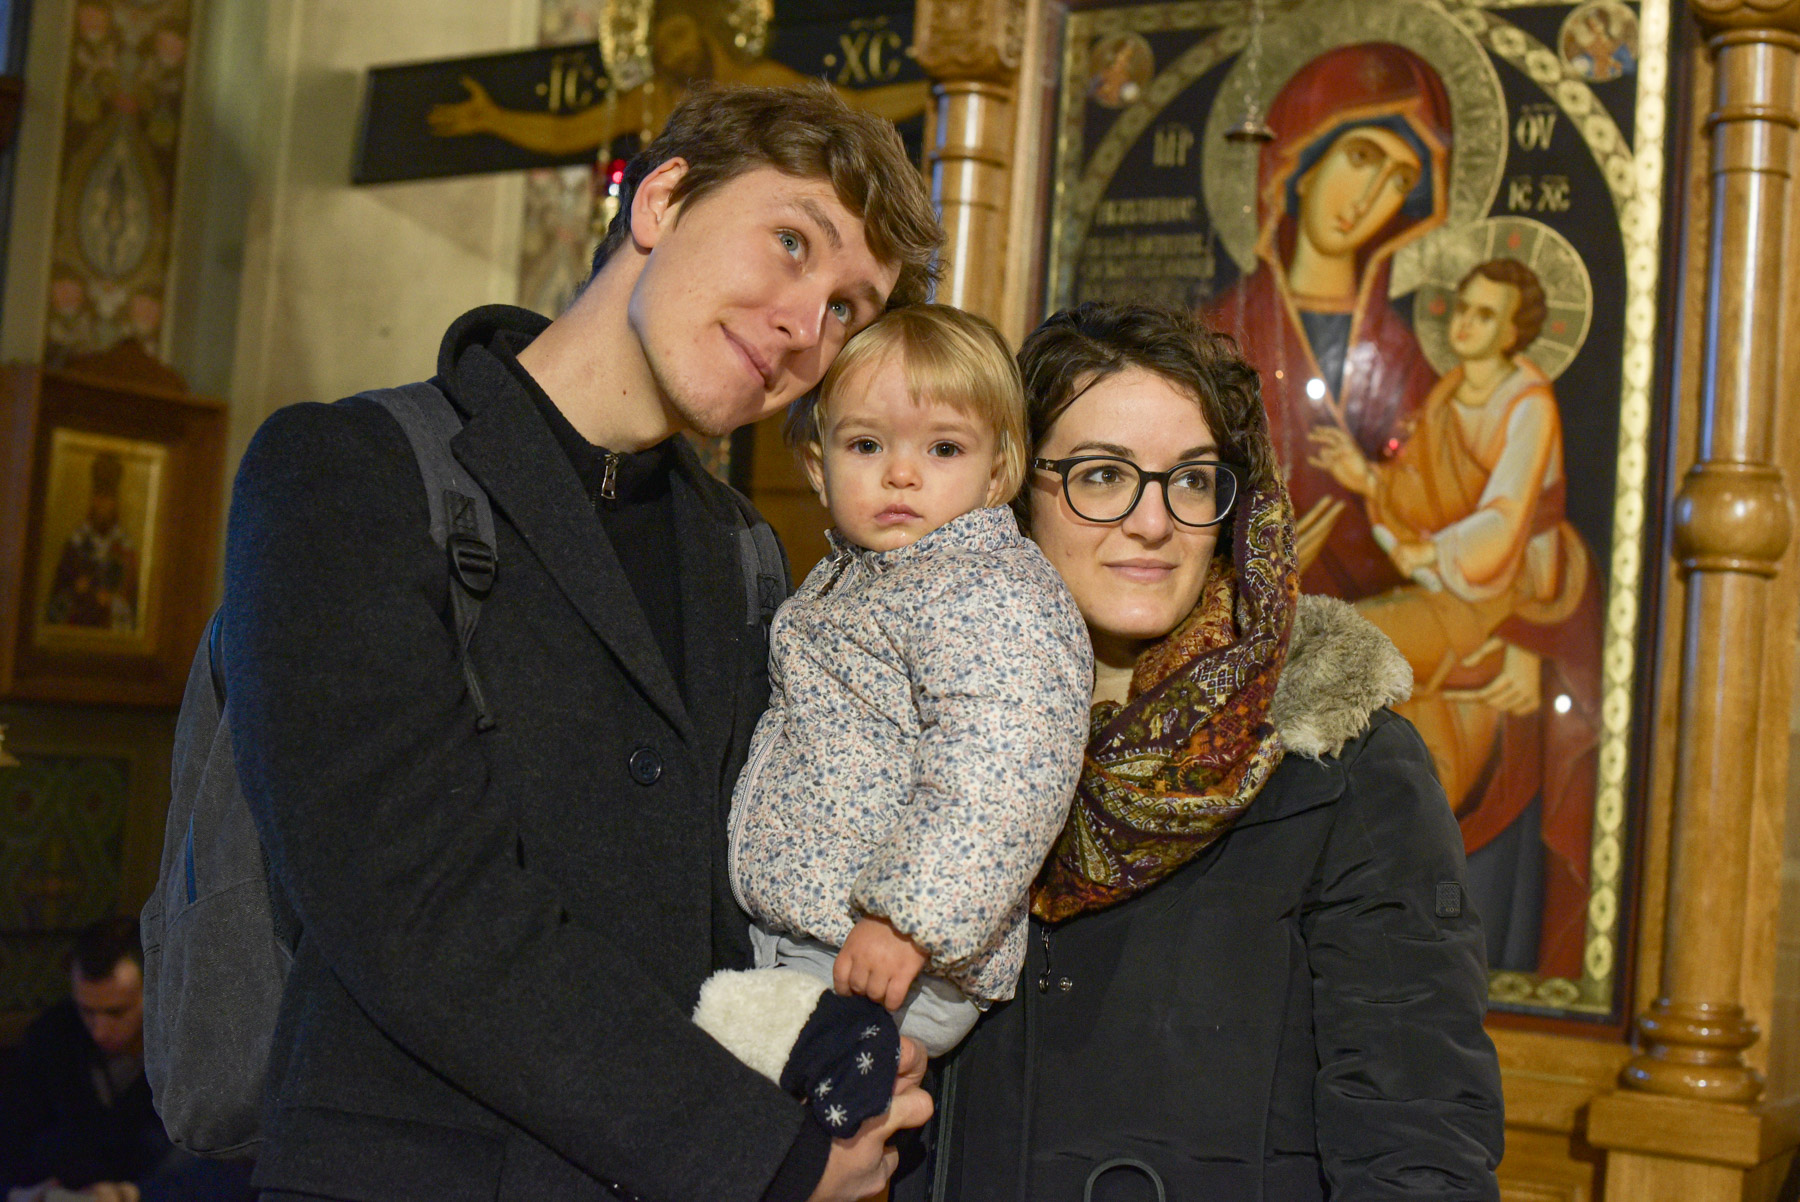 photos of orthodox christmas 0243 1